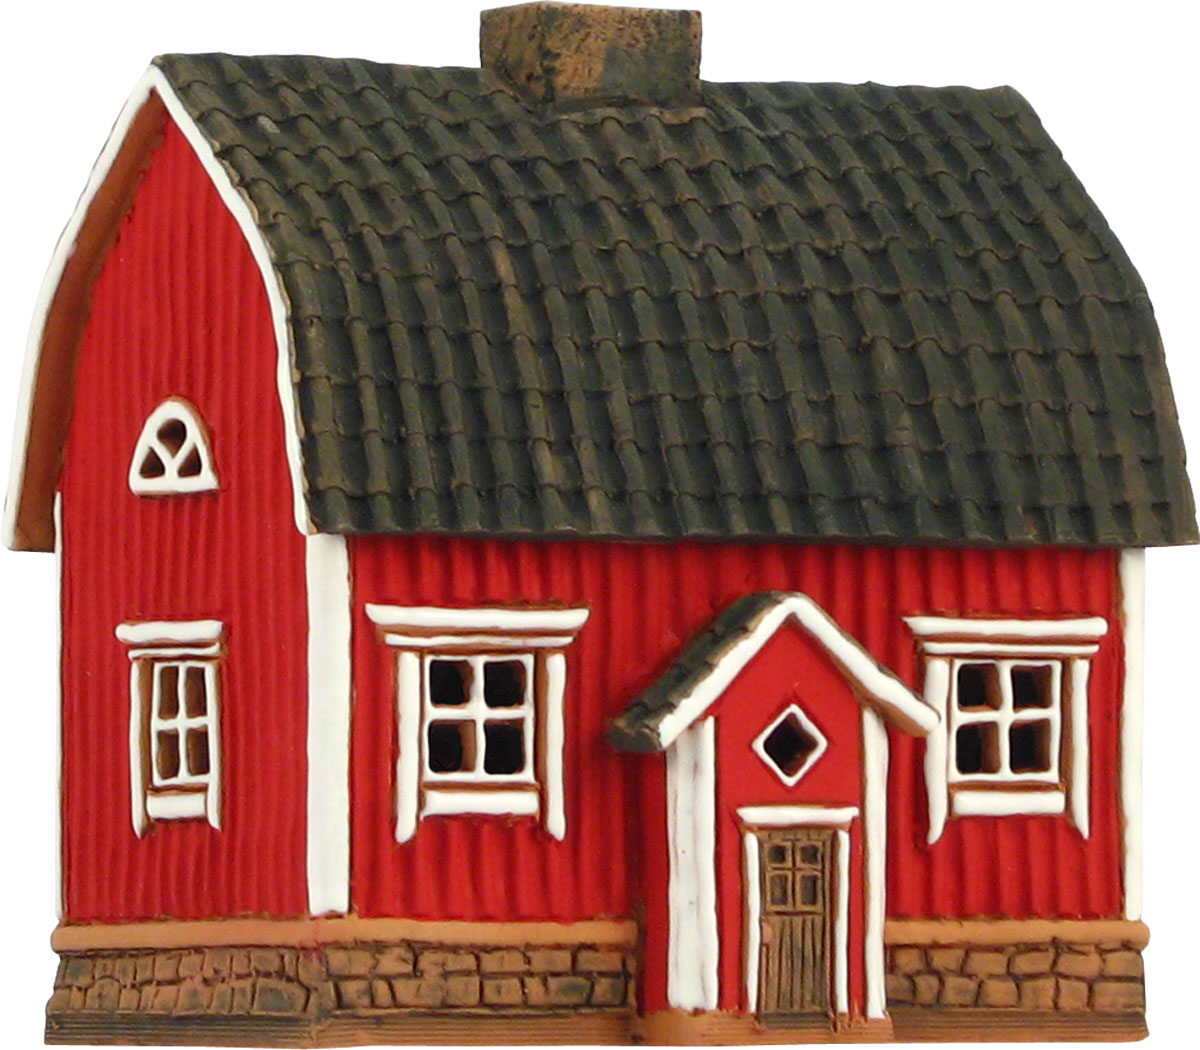 Johns Haus in Finnland